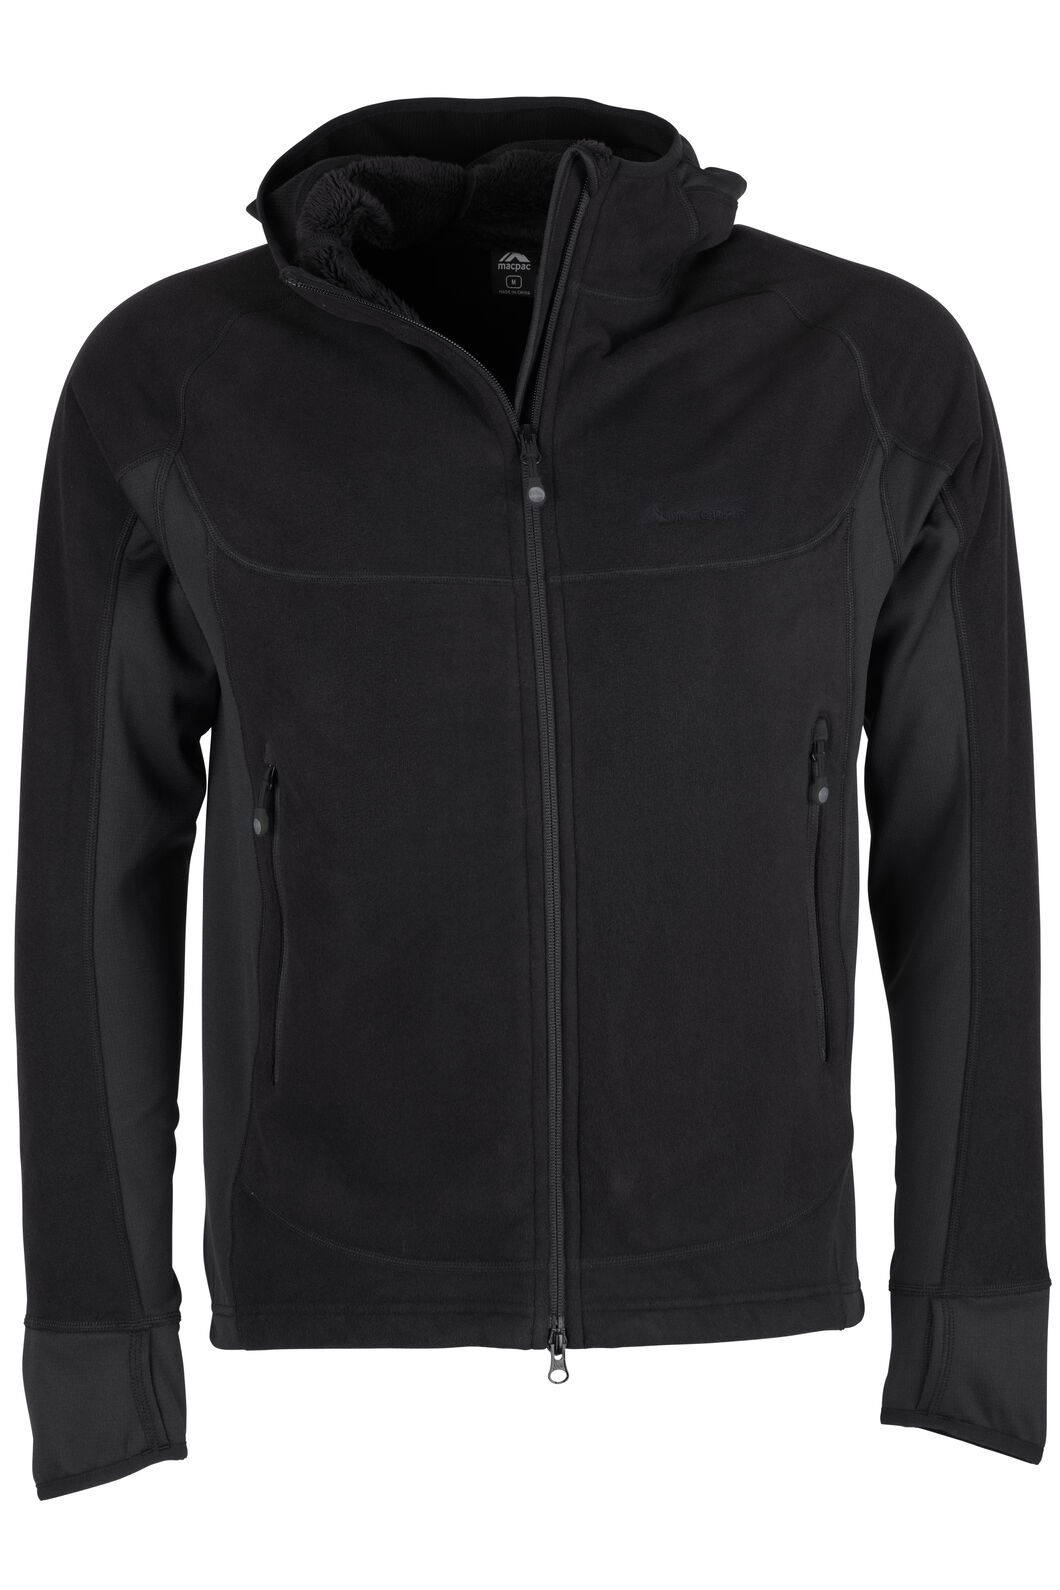 Macpac Mountain Hooded Pontetorto® Fleece Jacket - Men's | Macpac